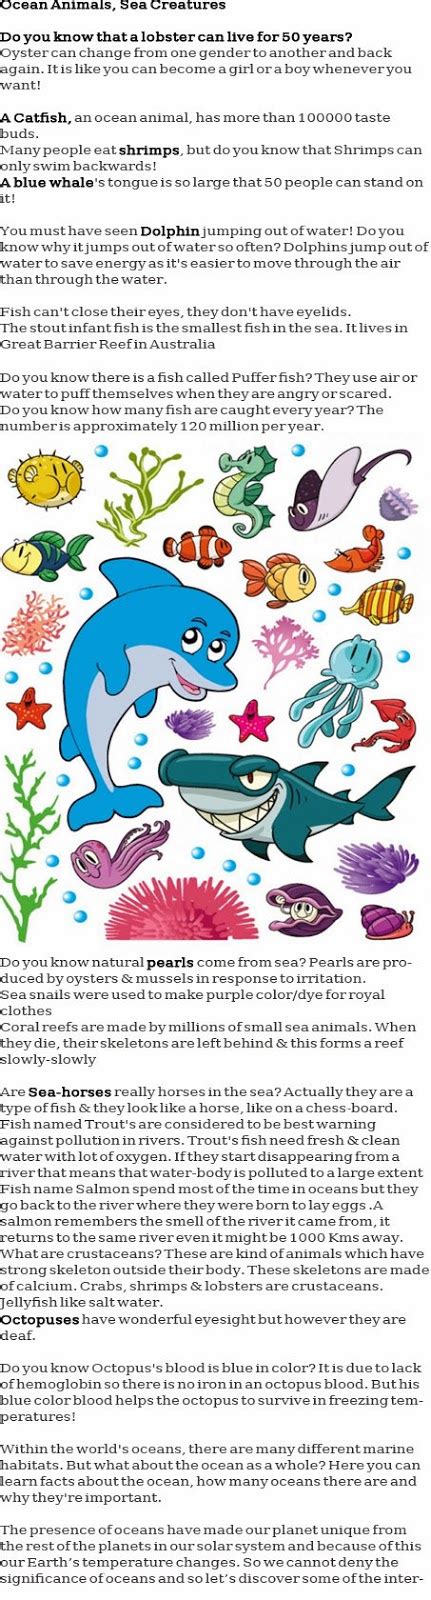 Ocean Animals For Kids Childhood Education